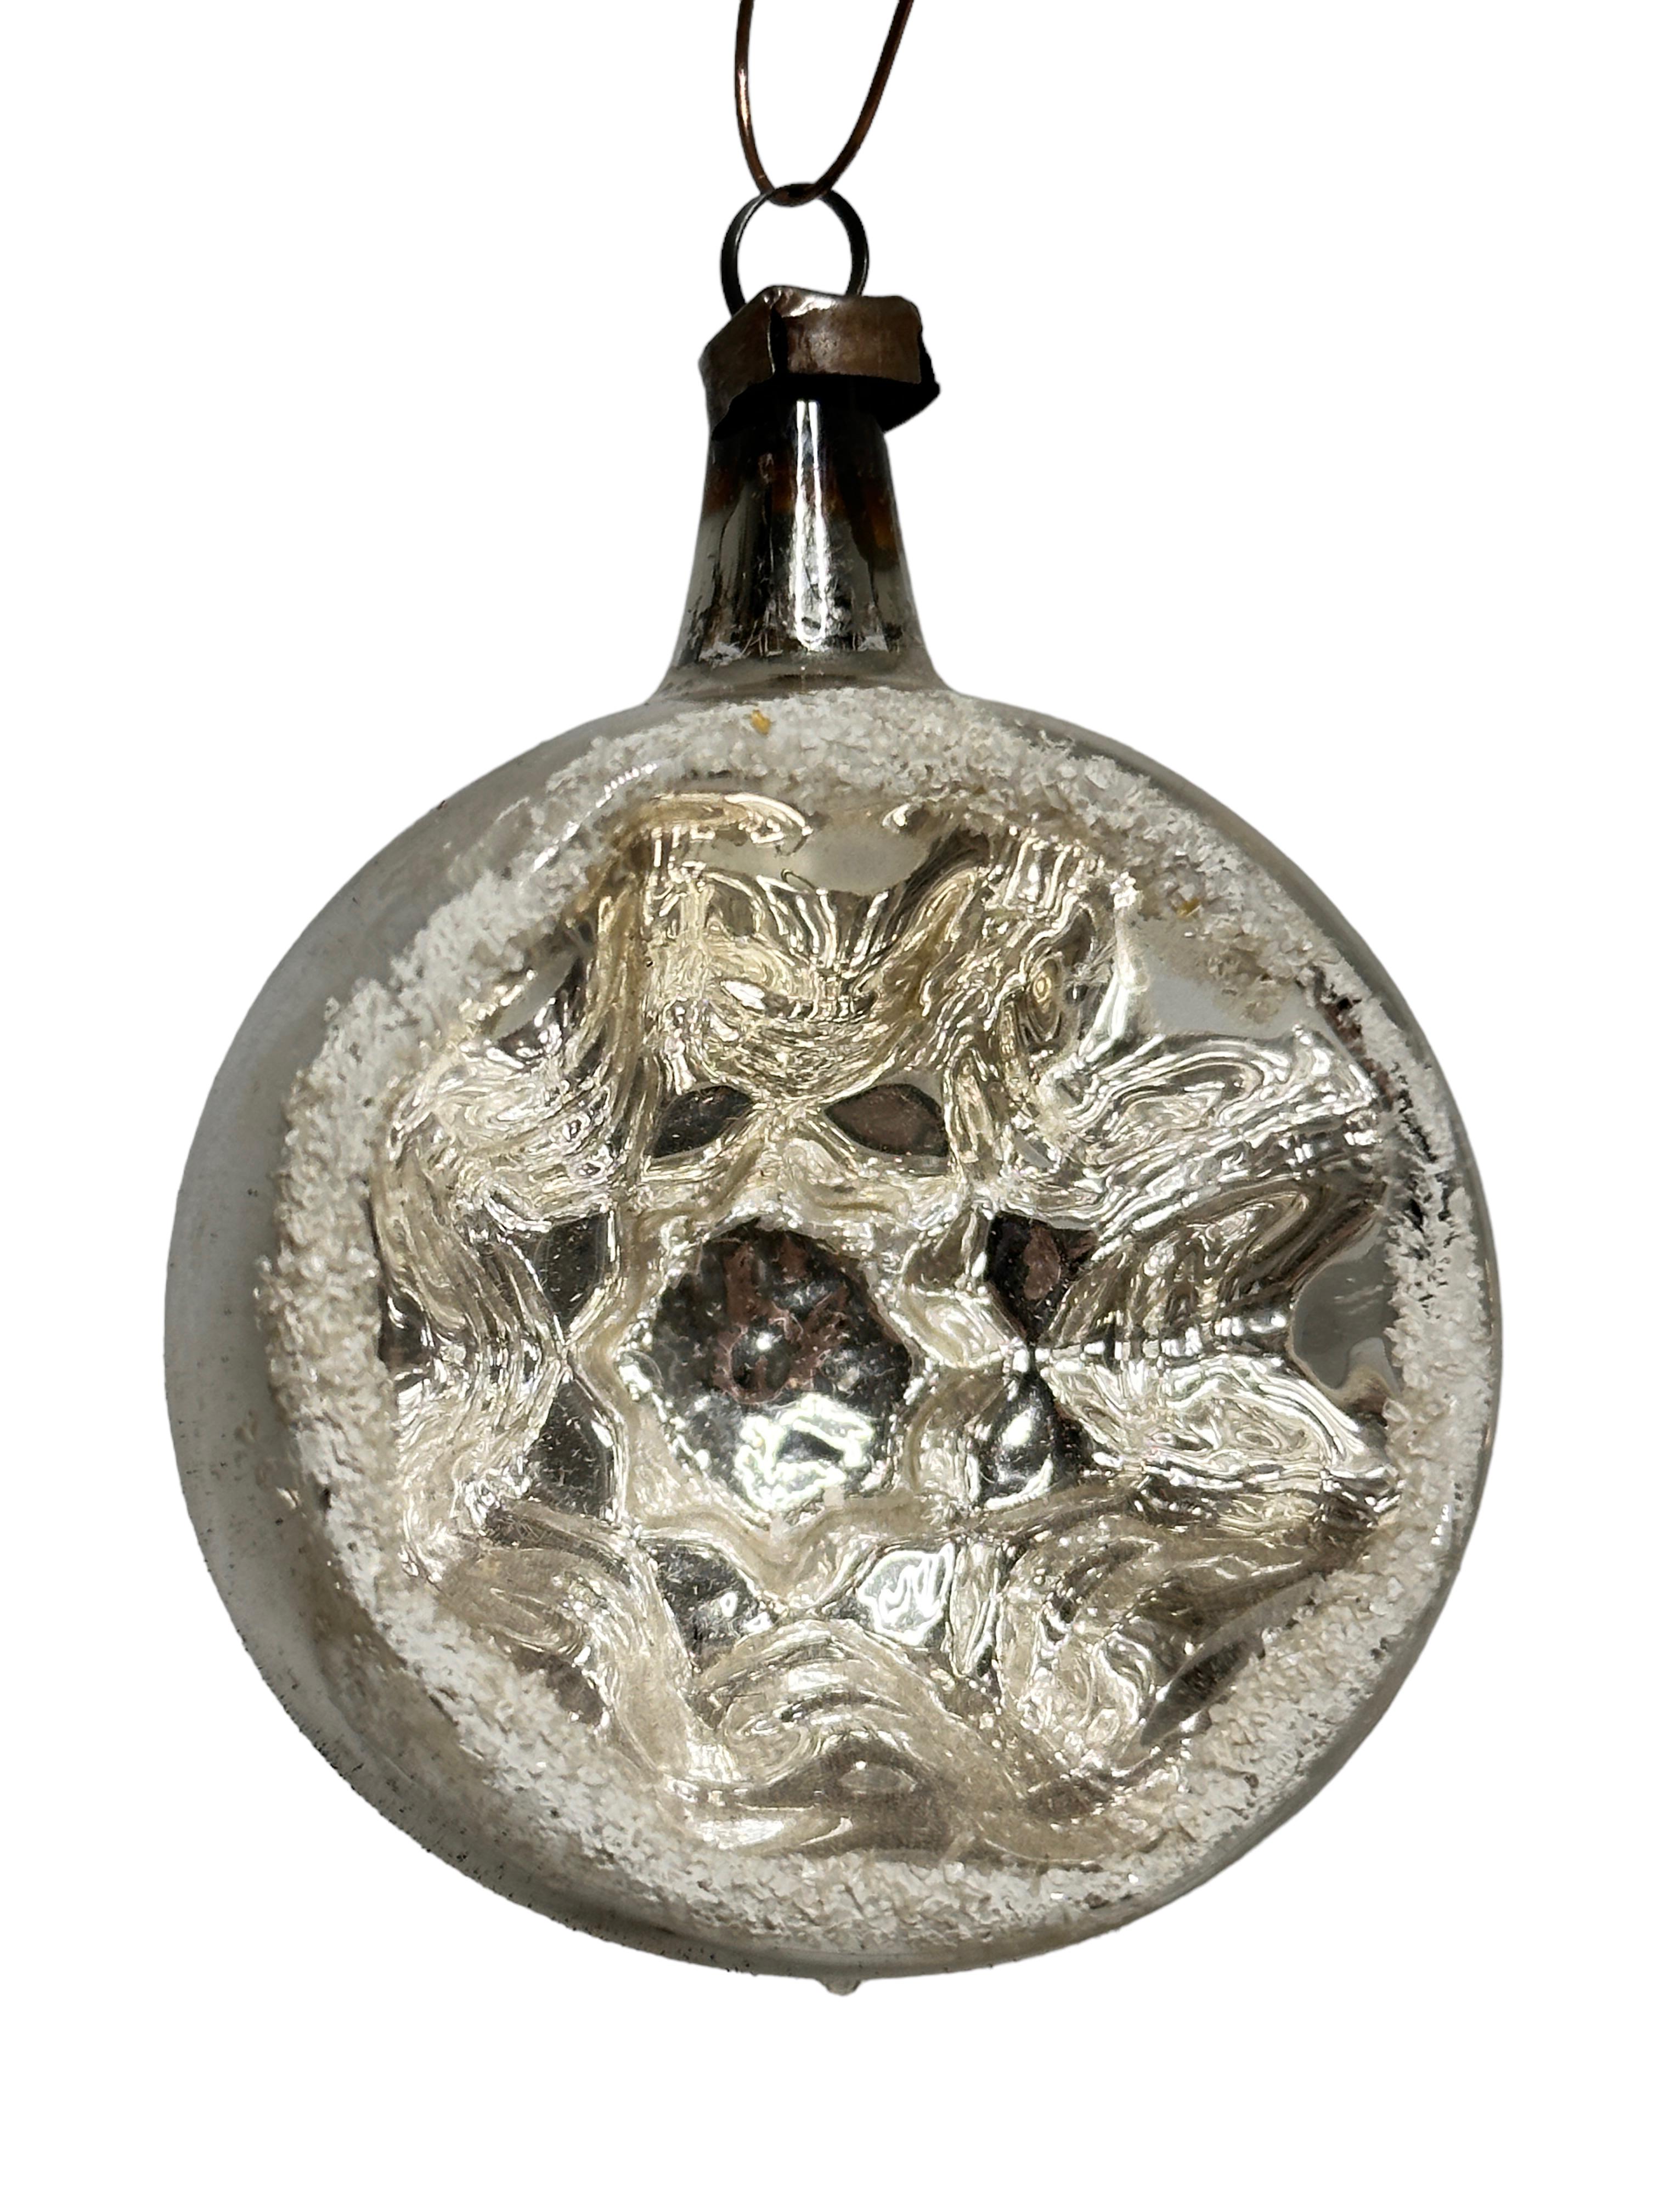 Set of Five Mercury Glass Ball Christmas Ornaments Vintage, German, 1910s For Sale 6